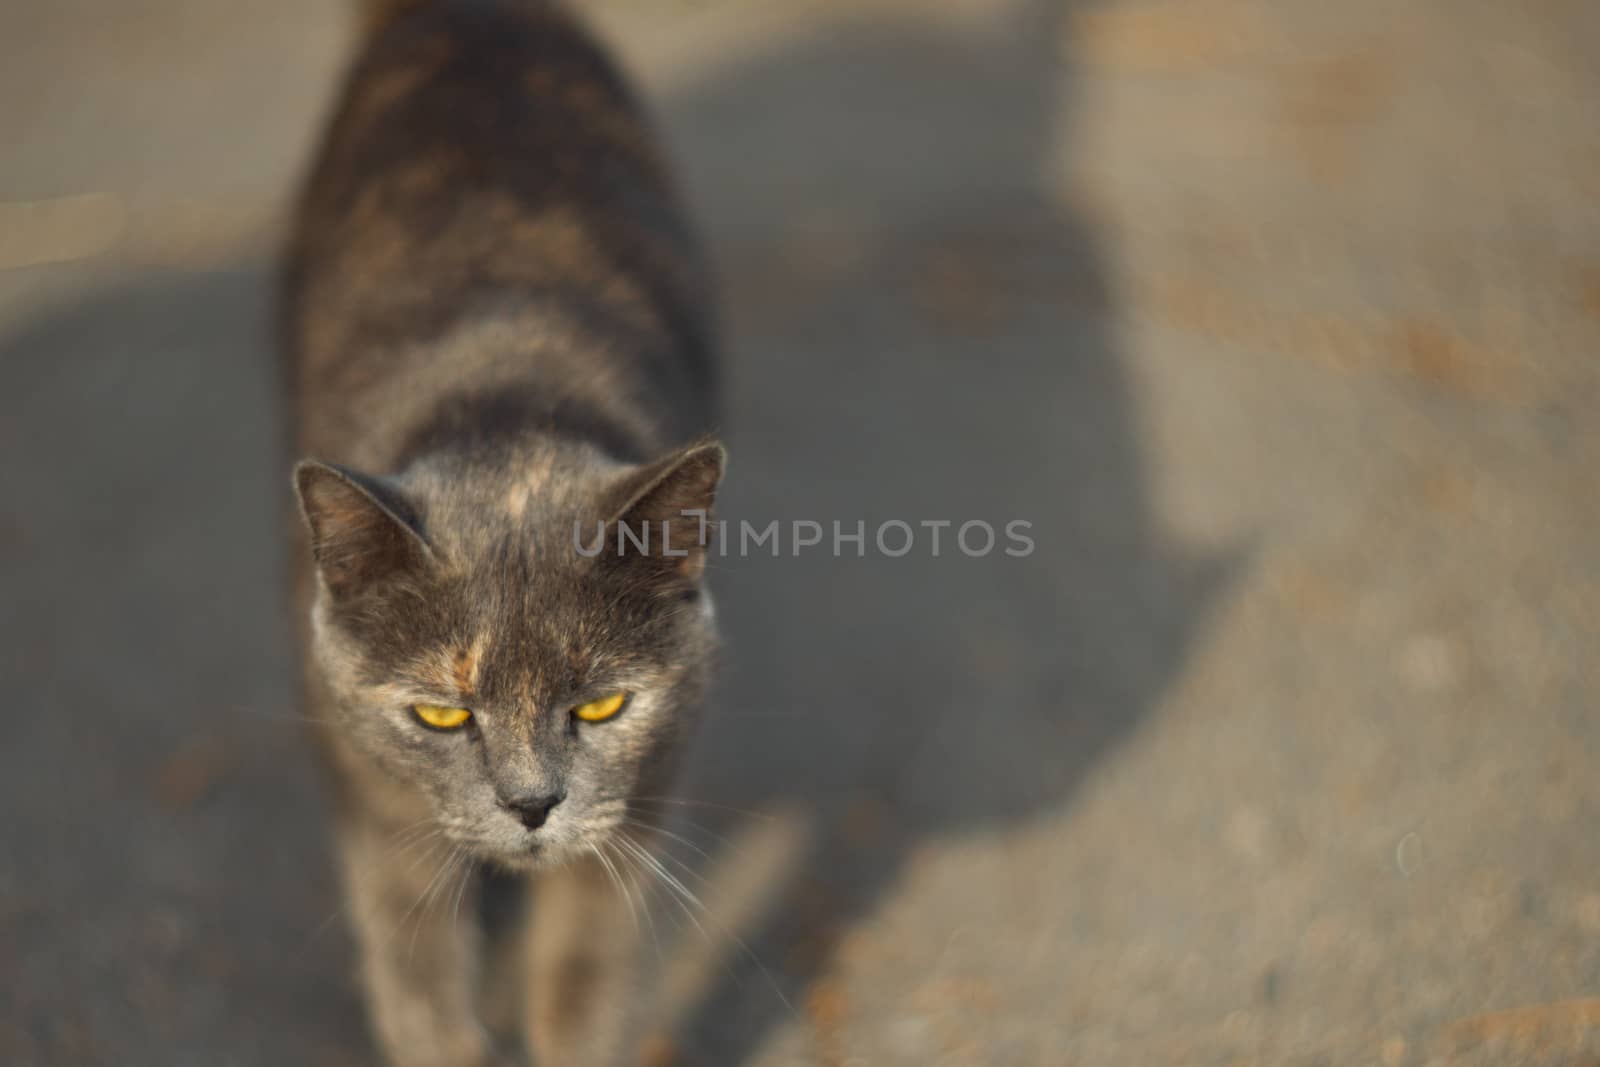 Temperamental homeless gray cat looks at you in a big city. Cat walks on asphalt. Cat is homeless.